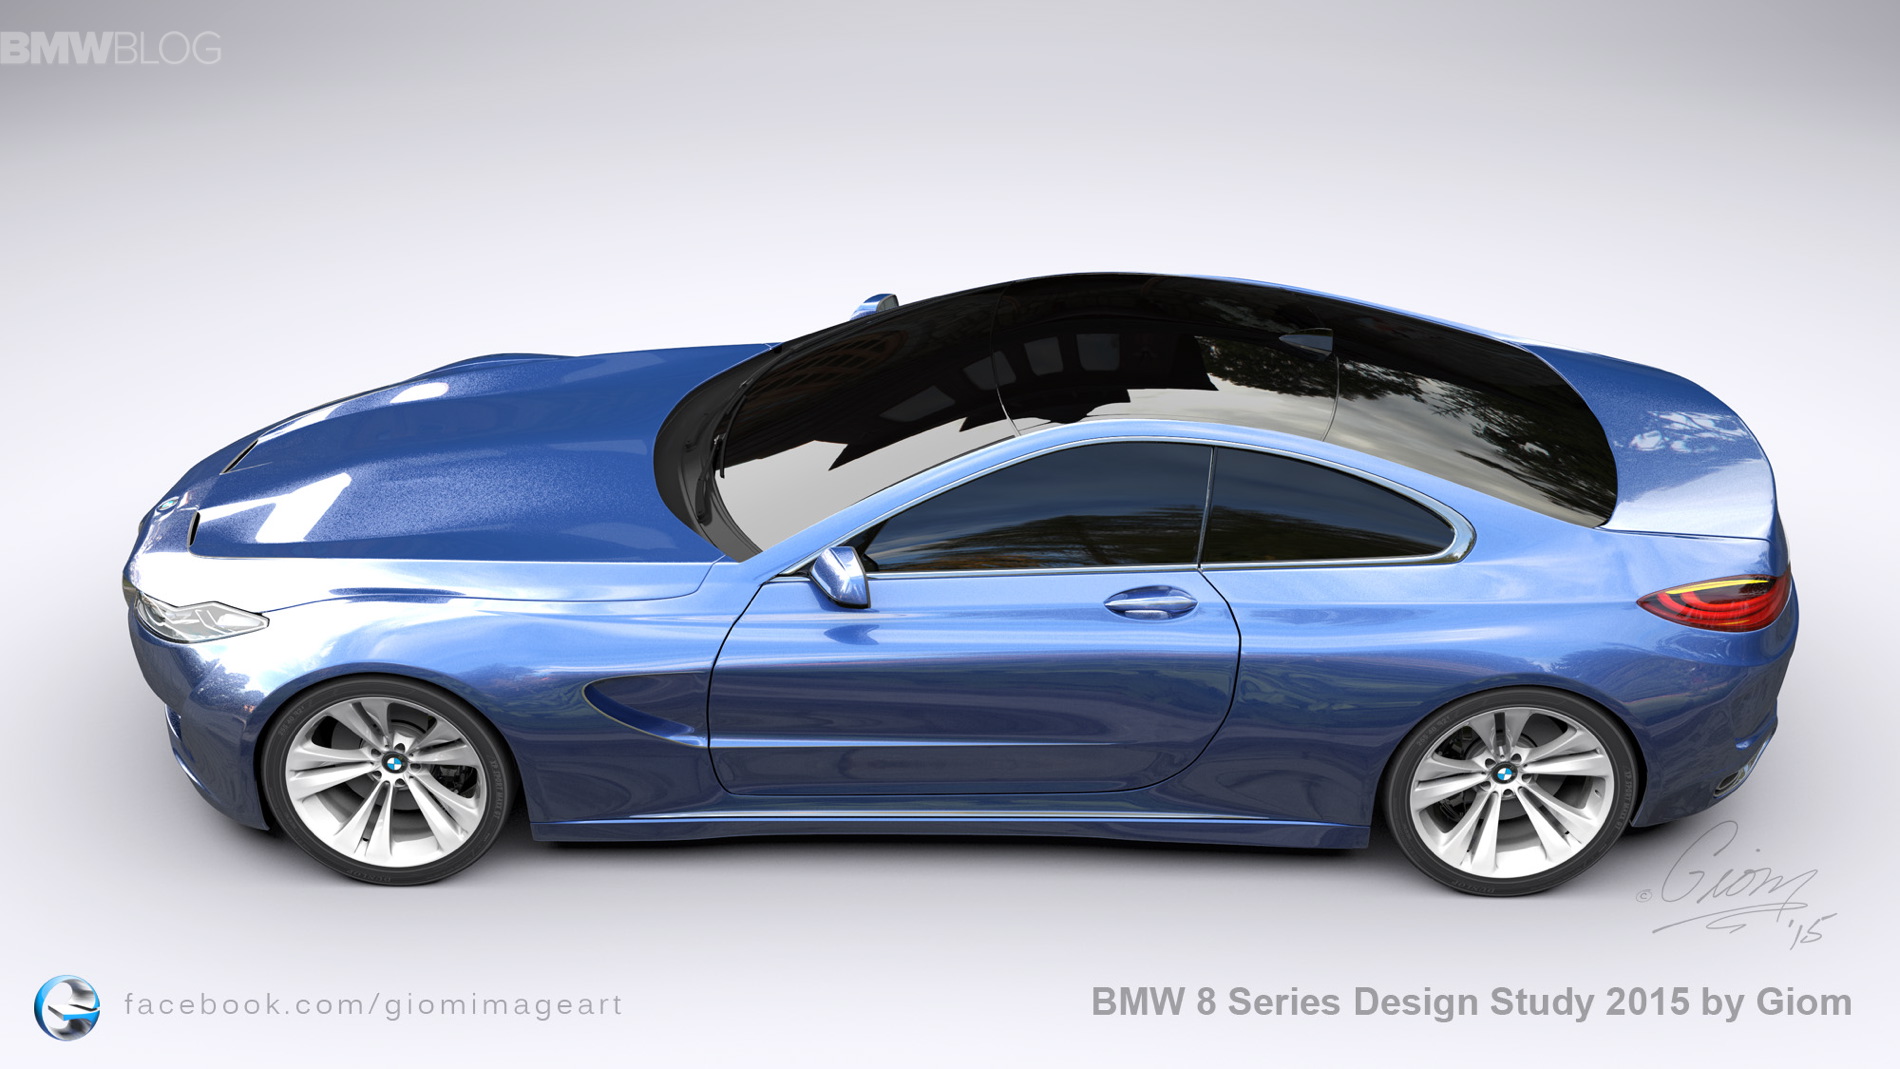 BMW 8 Series Design Study images 8